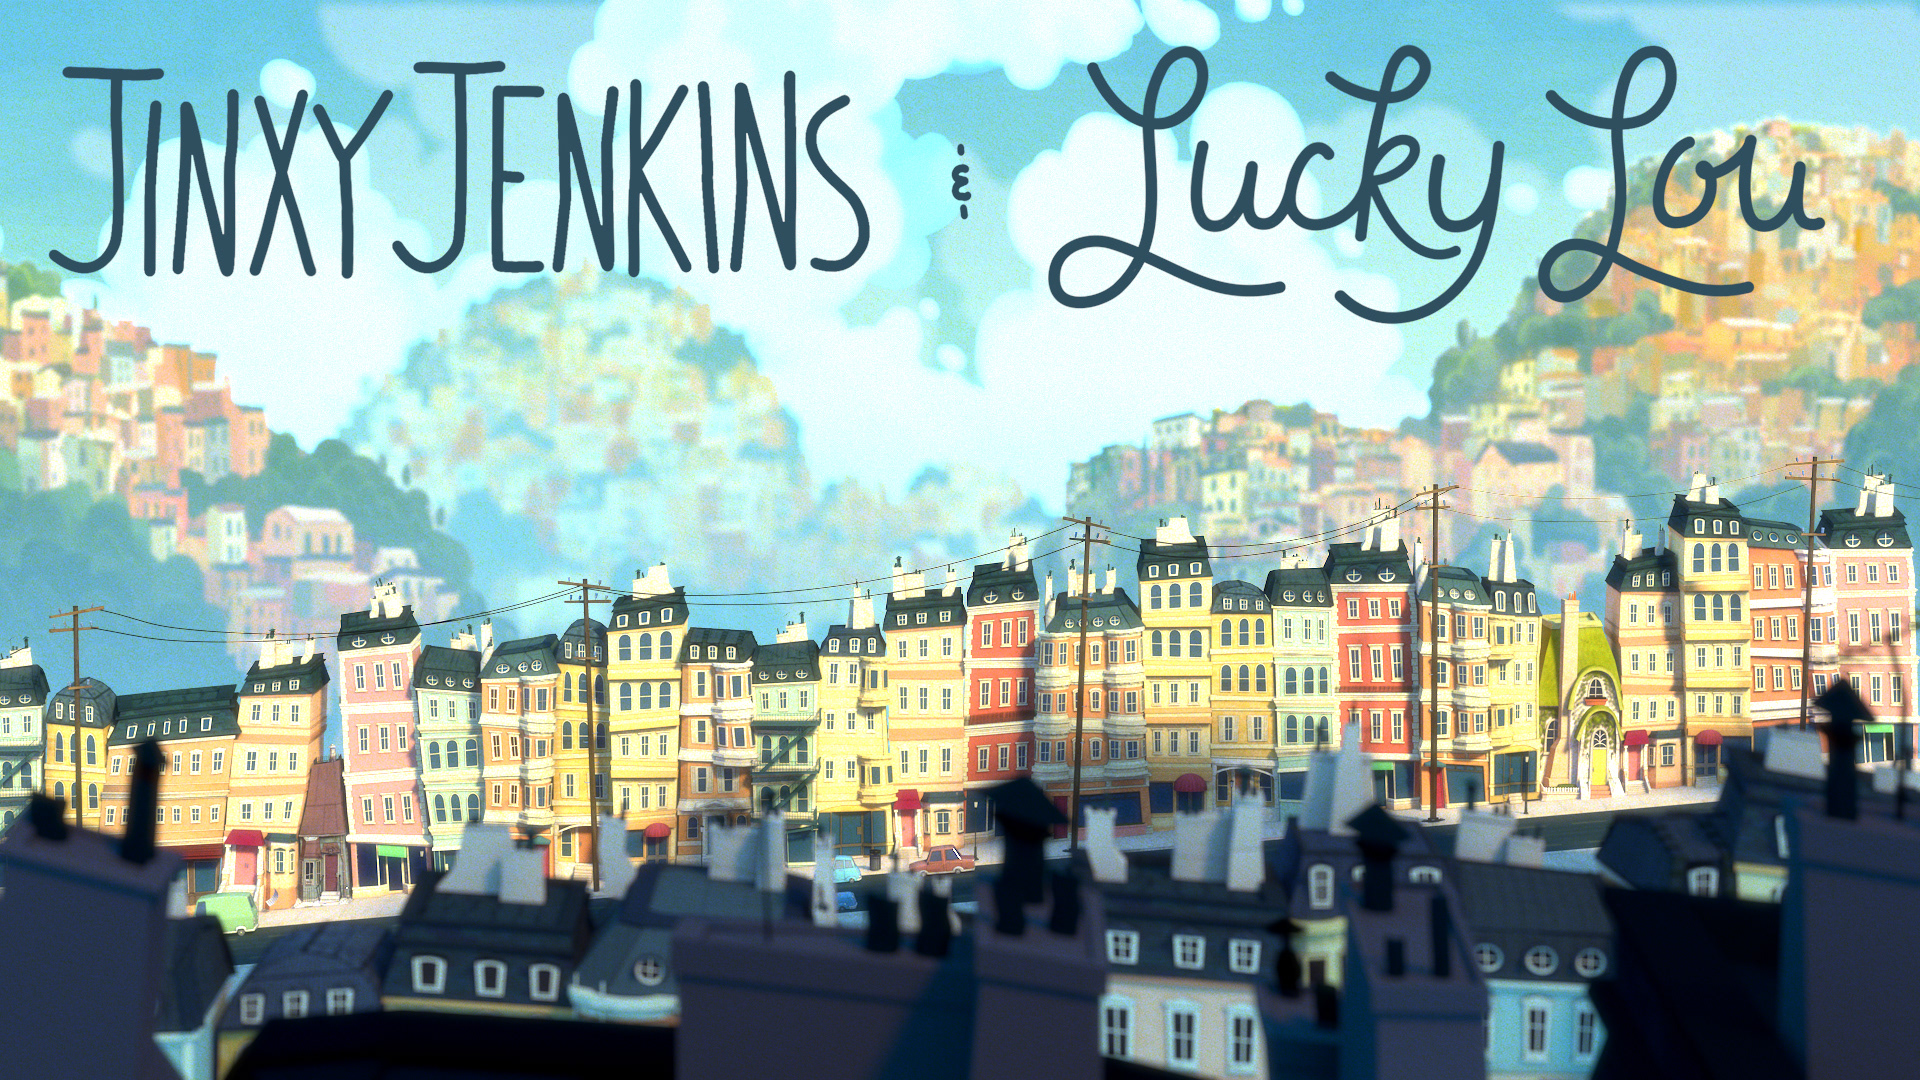 Michael Bidinger - Jinxy Jenkins, Lucky Lou